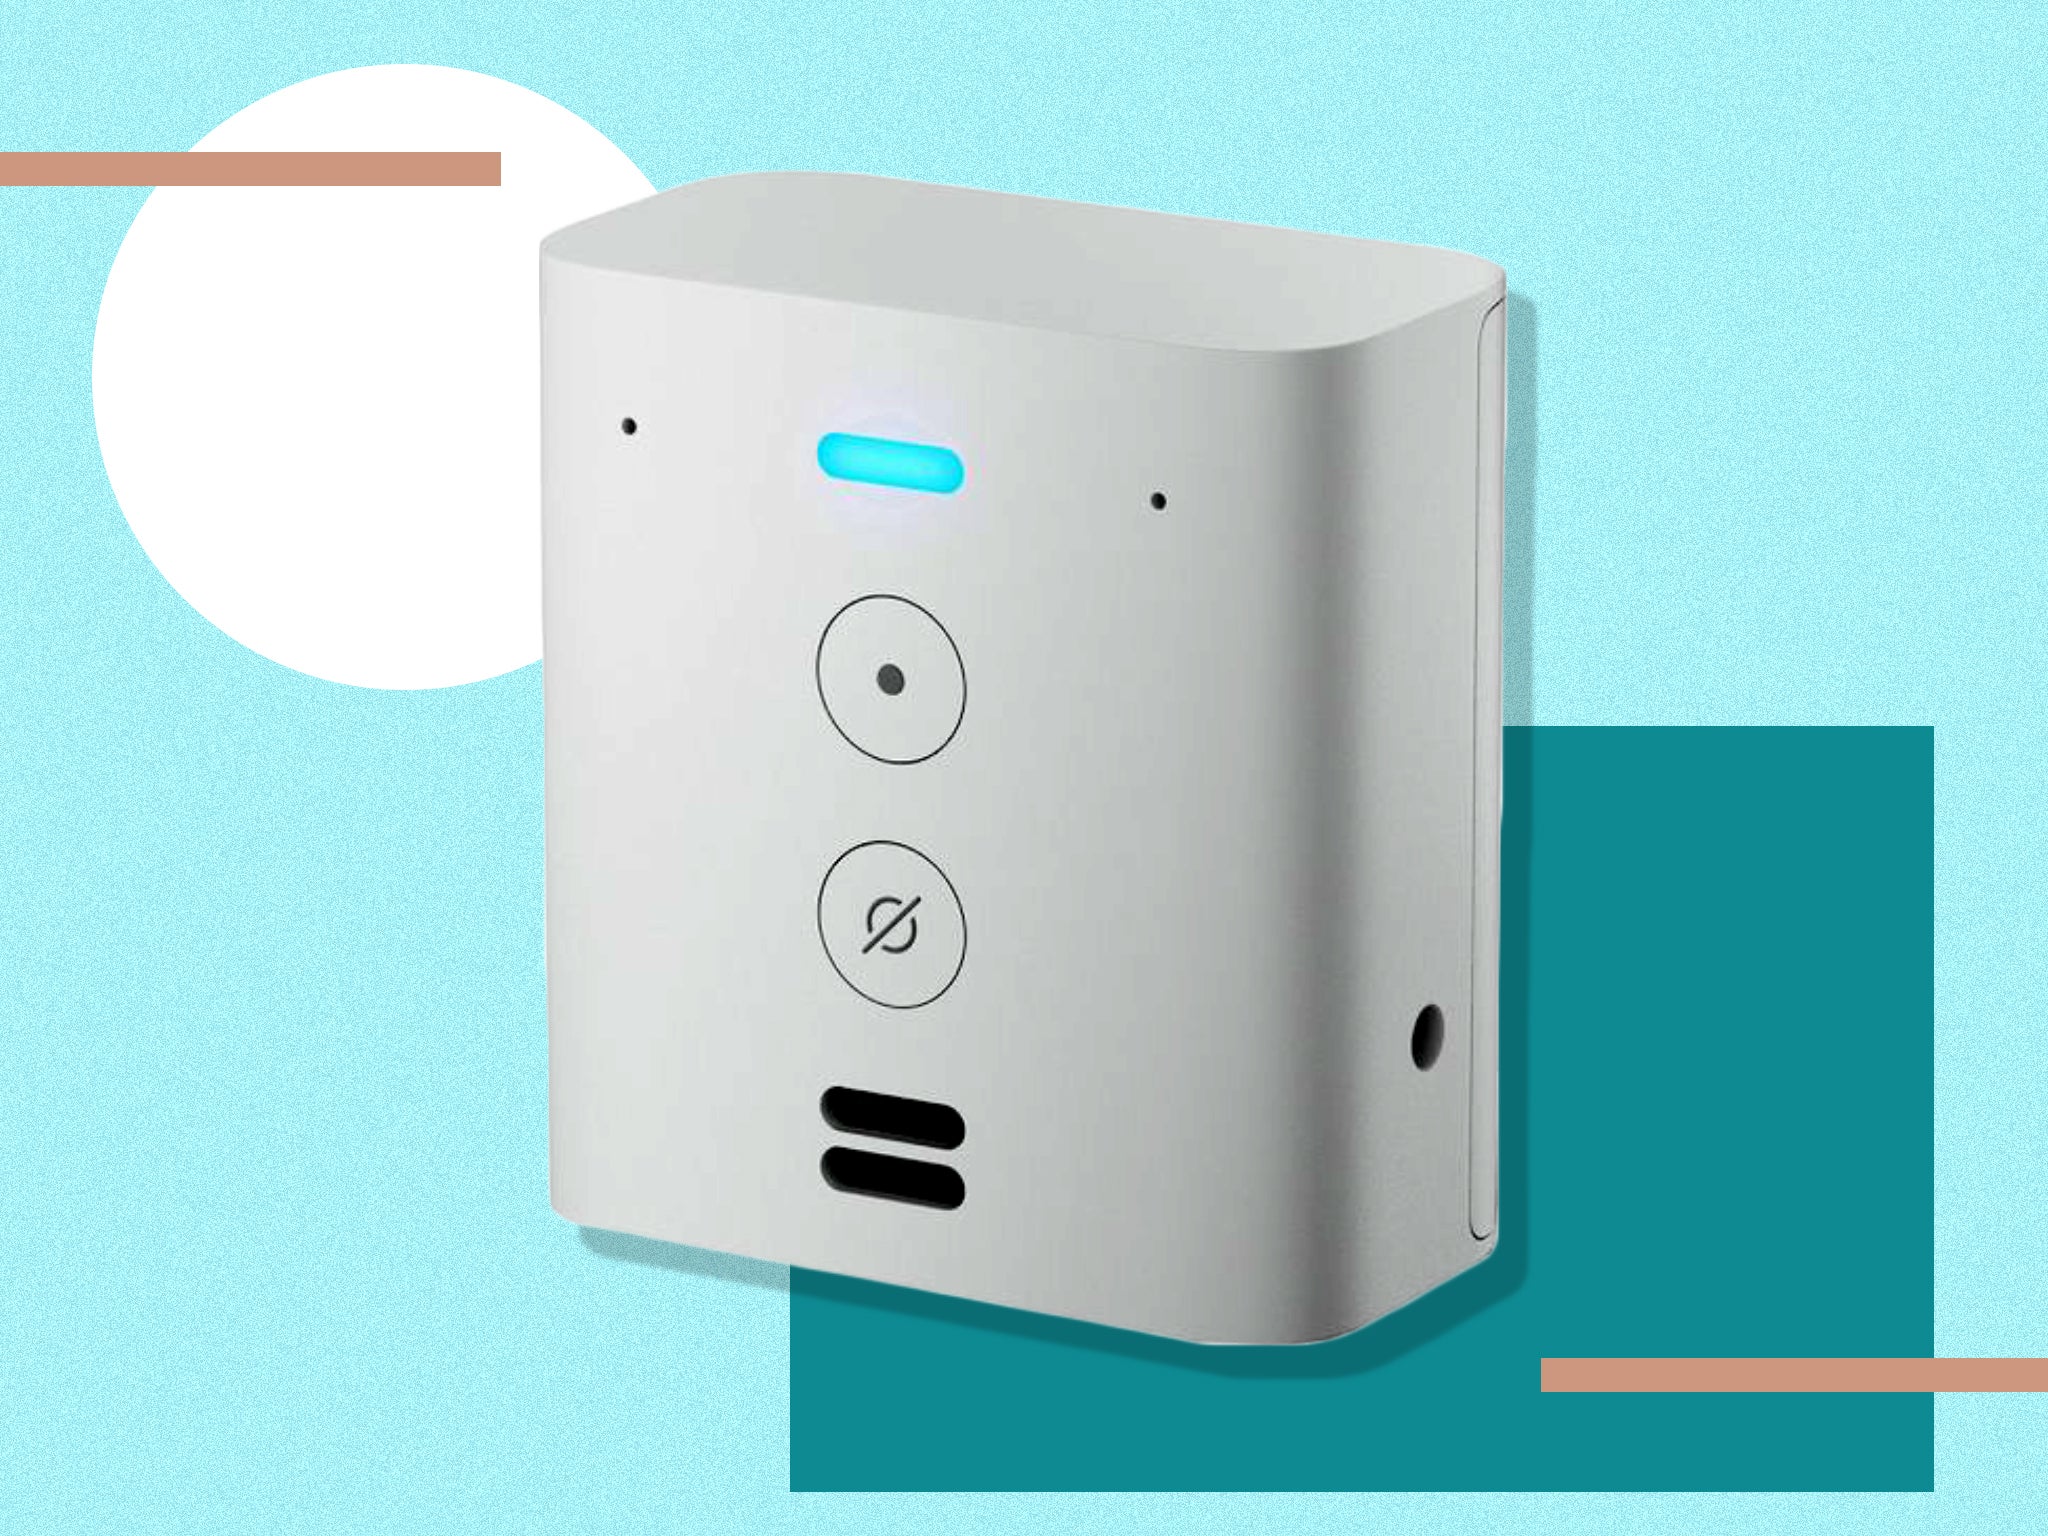 Echo Flex Voice control smart home devices with Alexa 